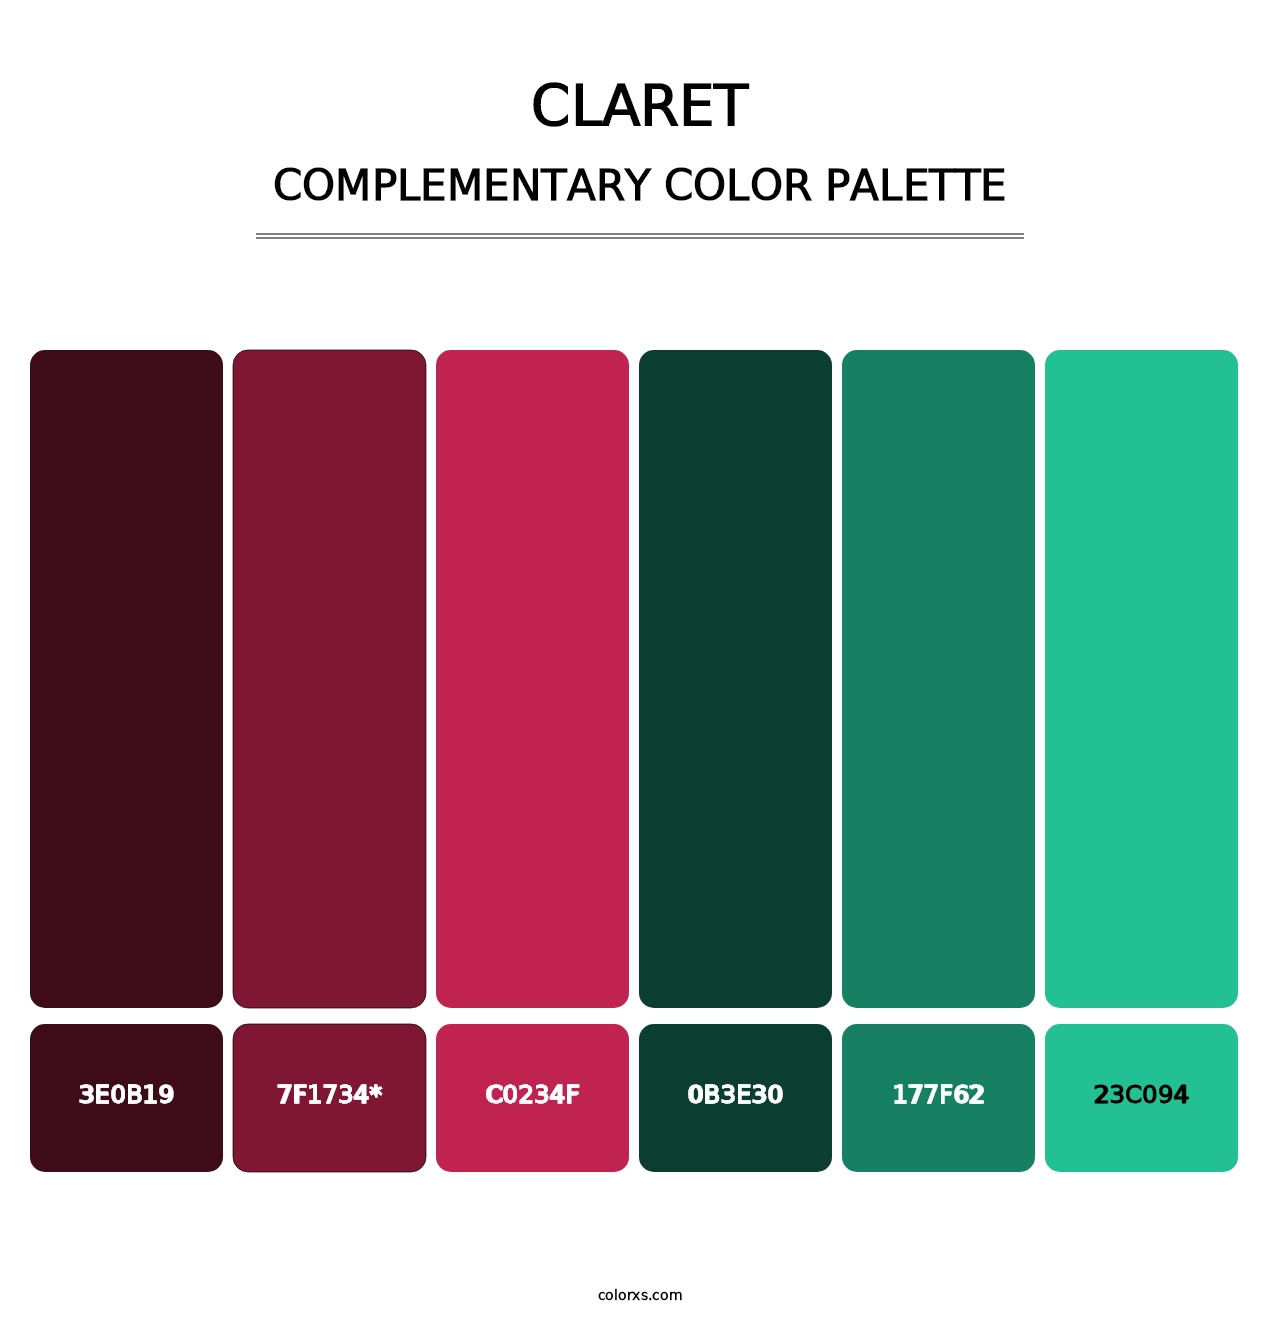 Claret - Complementary Color Palette